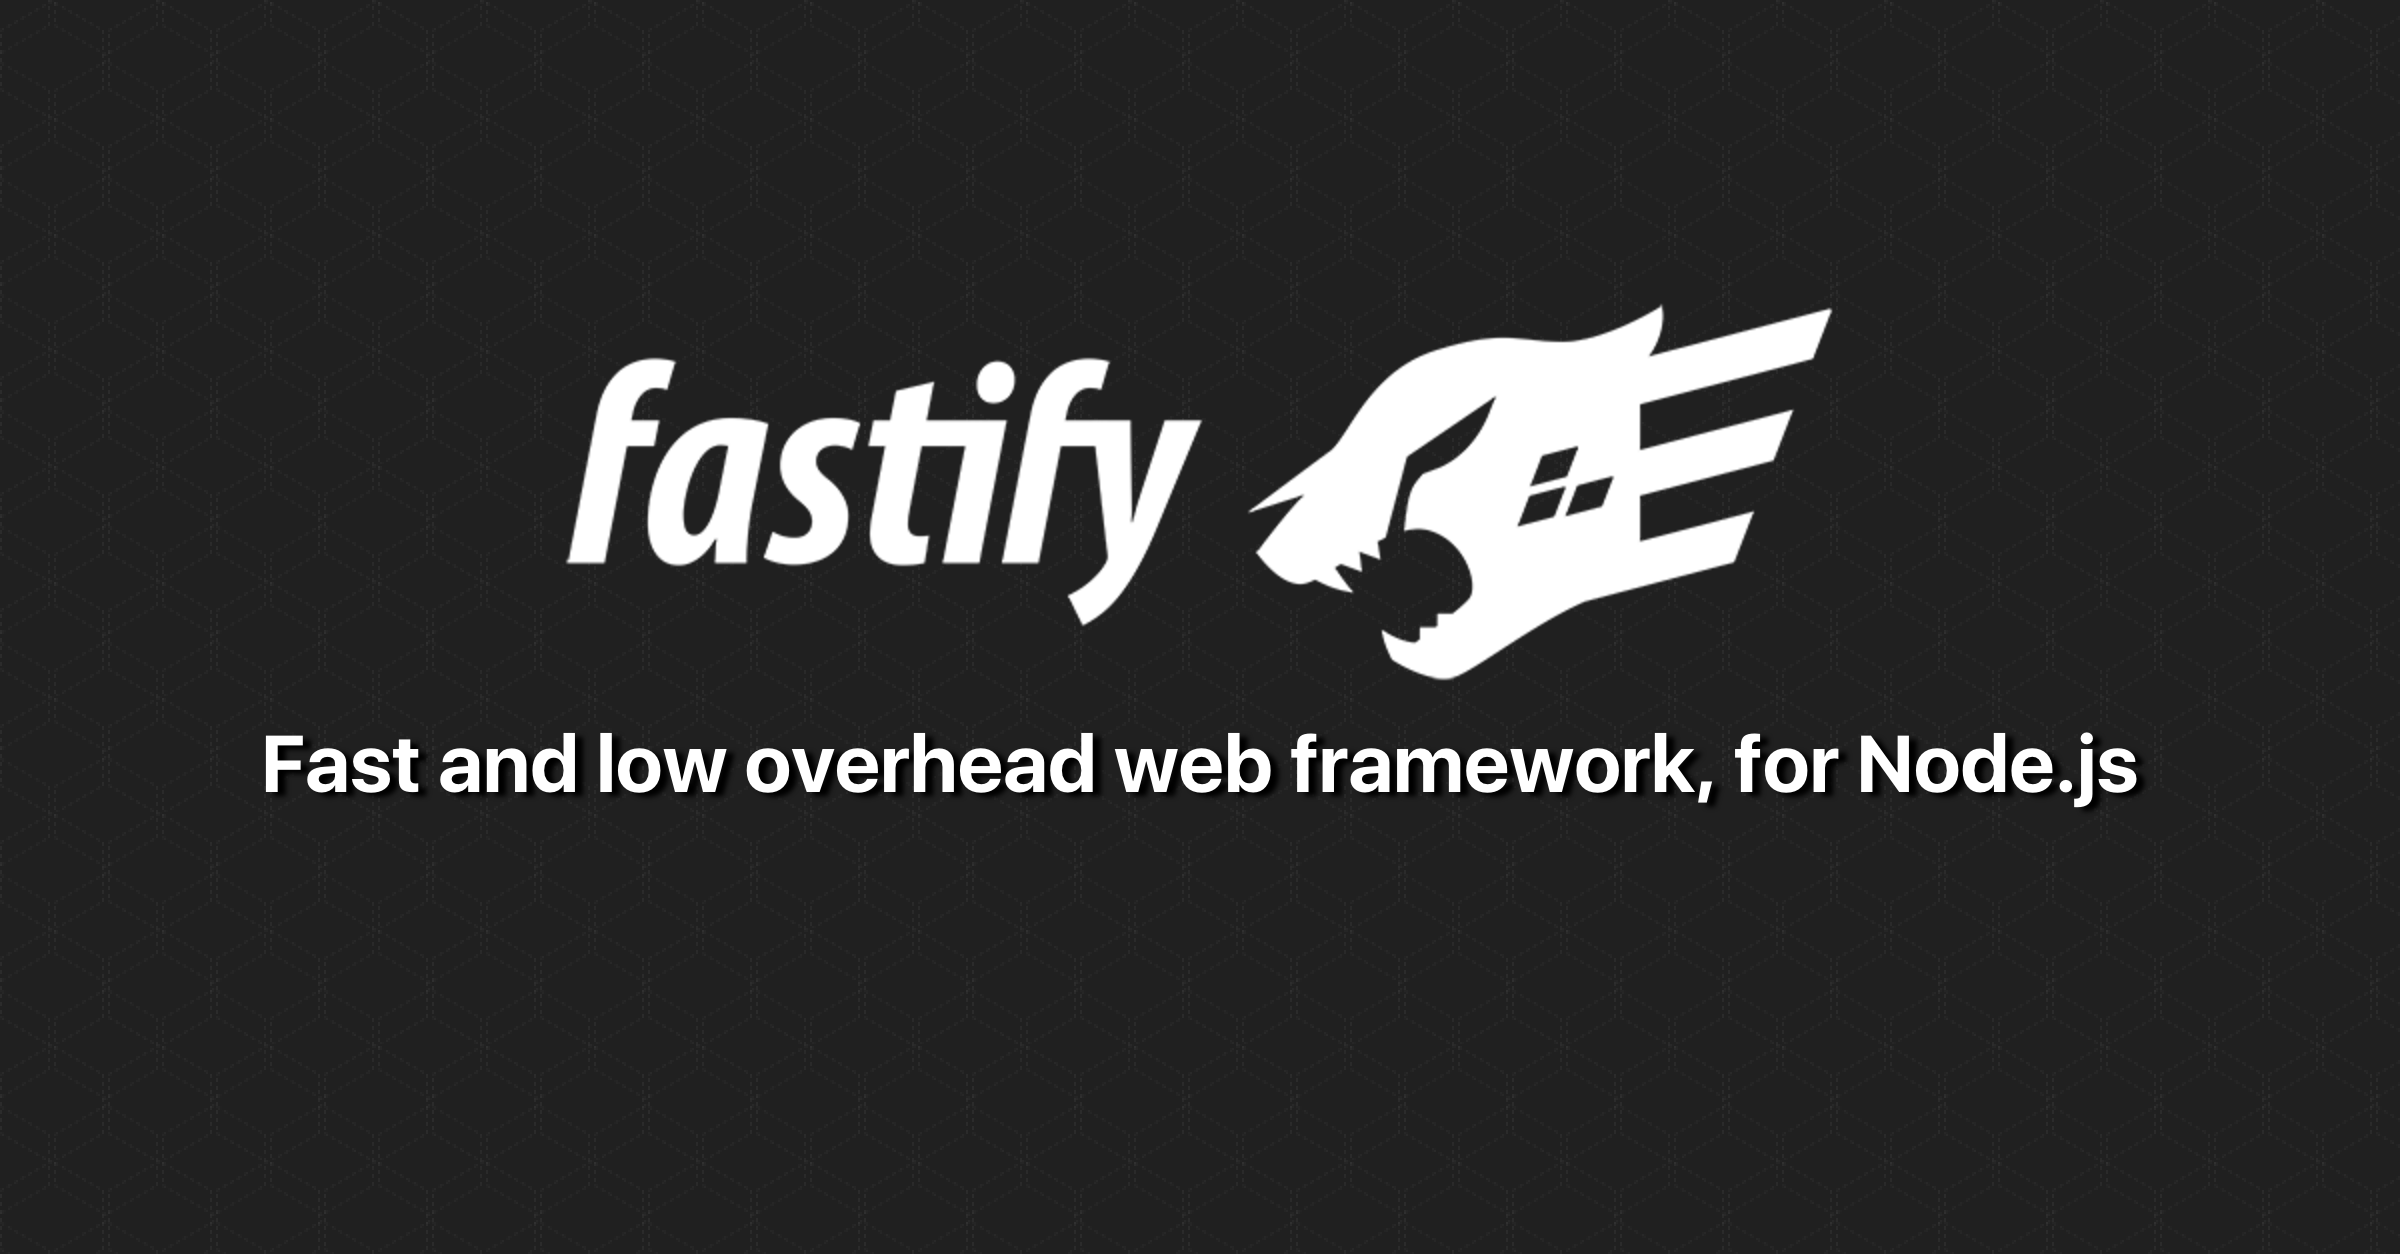 Fastify brand image